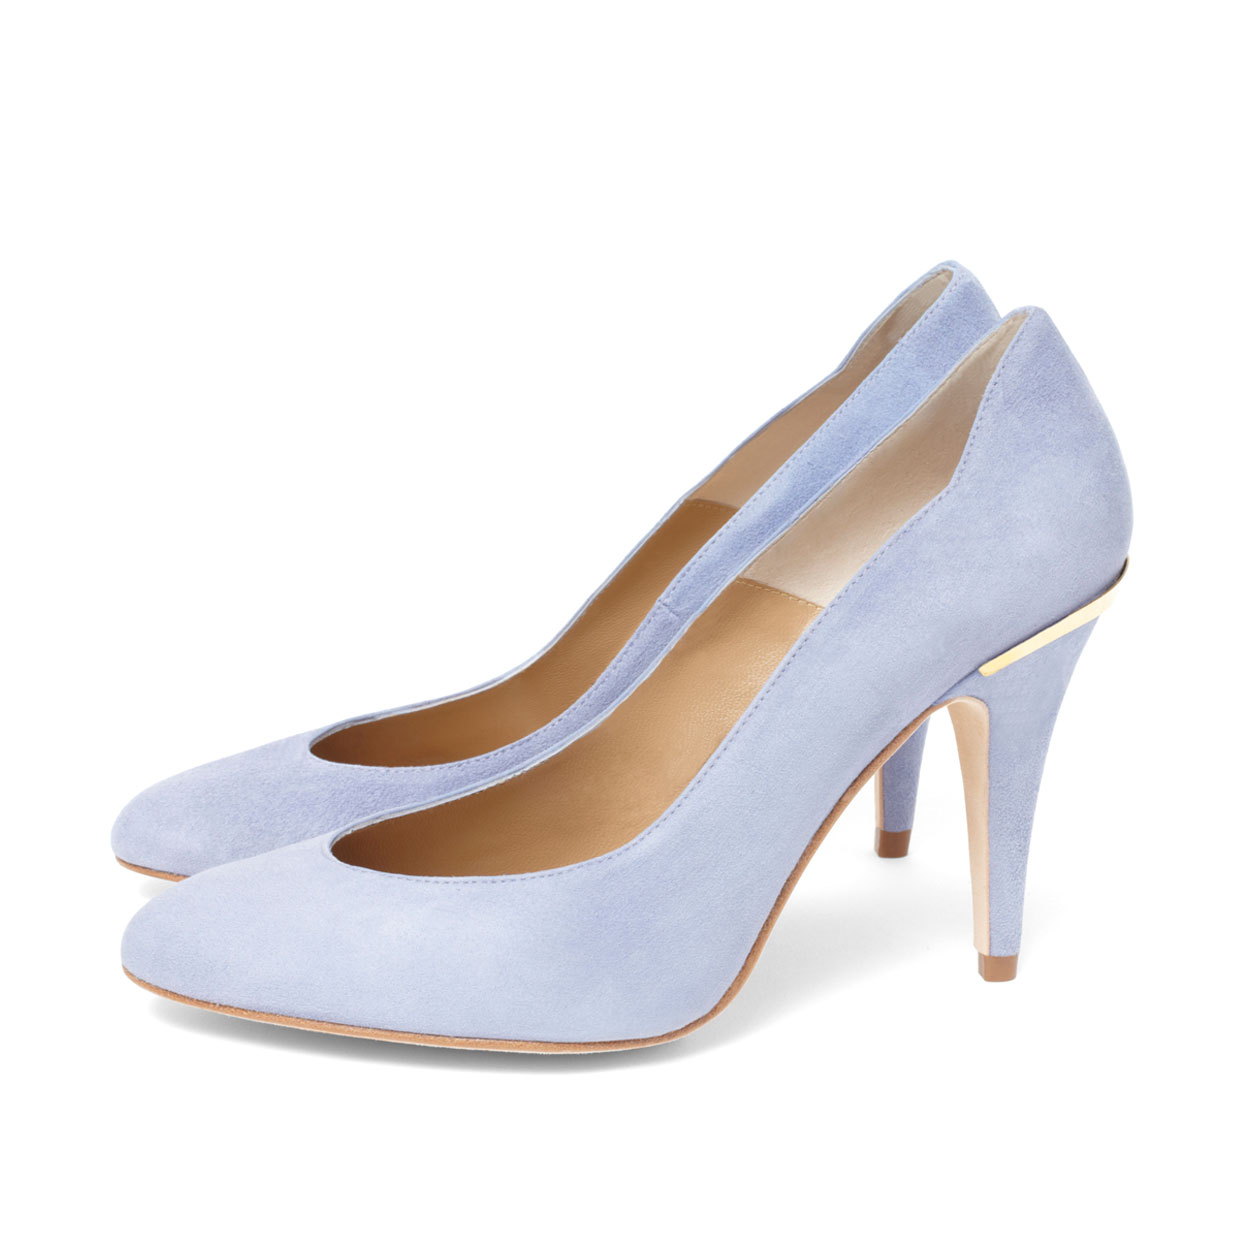 jazz-blue-pair-pastel-colour-cleob-heels-shopping-luxury.jpg